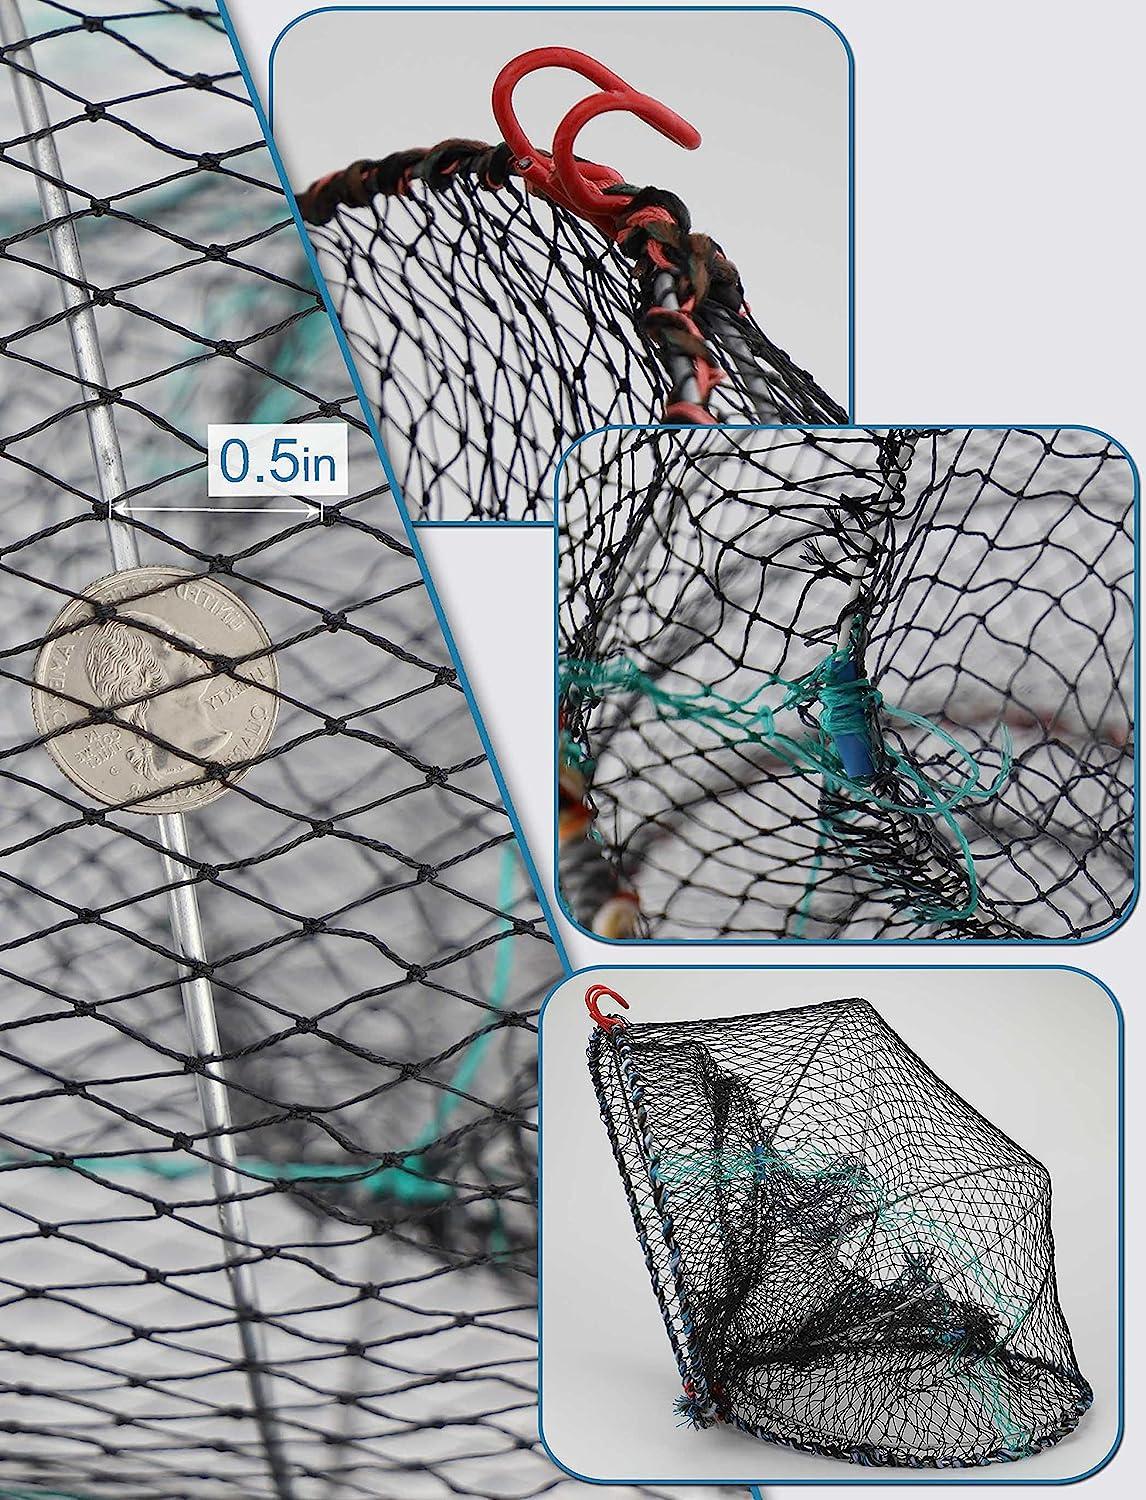 Ducurt Crab Trap Minnow Trap, 2PCS Crawfish Fish Trap for Bait